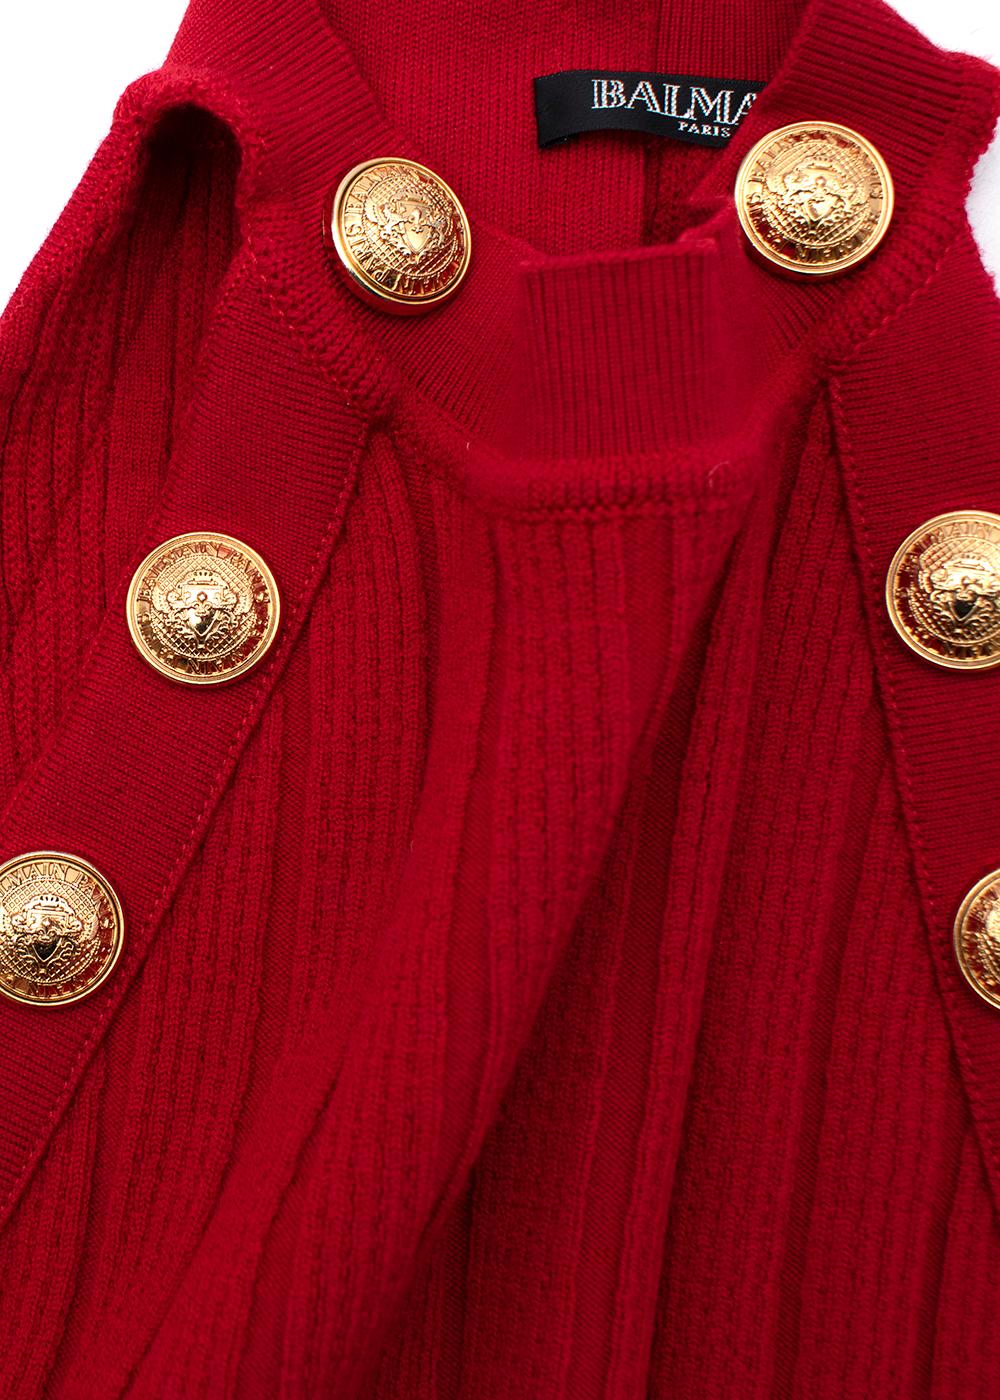 Women's Red Sleeveless Rib-Knit Dress